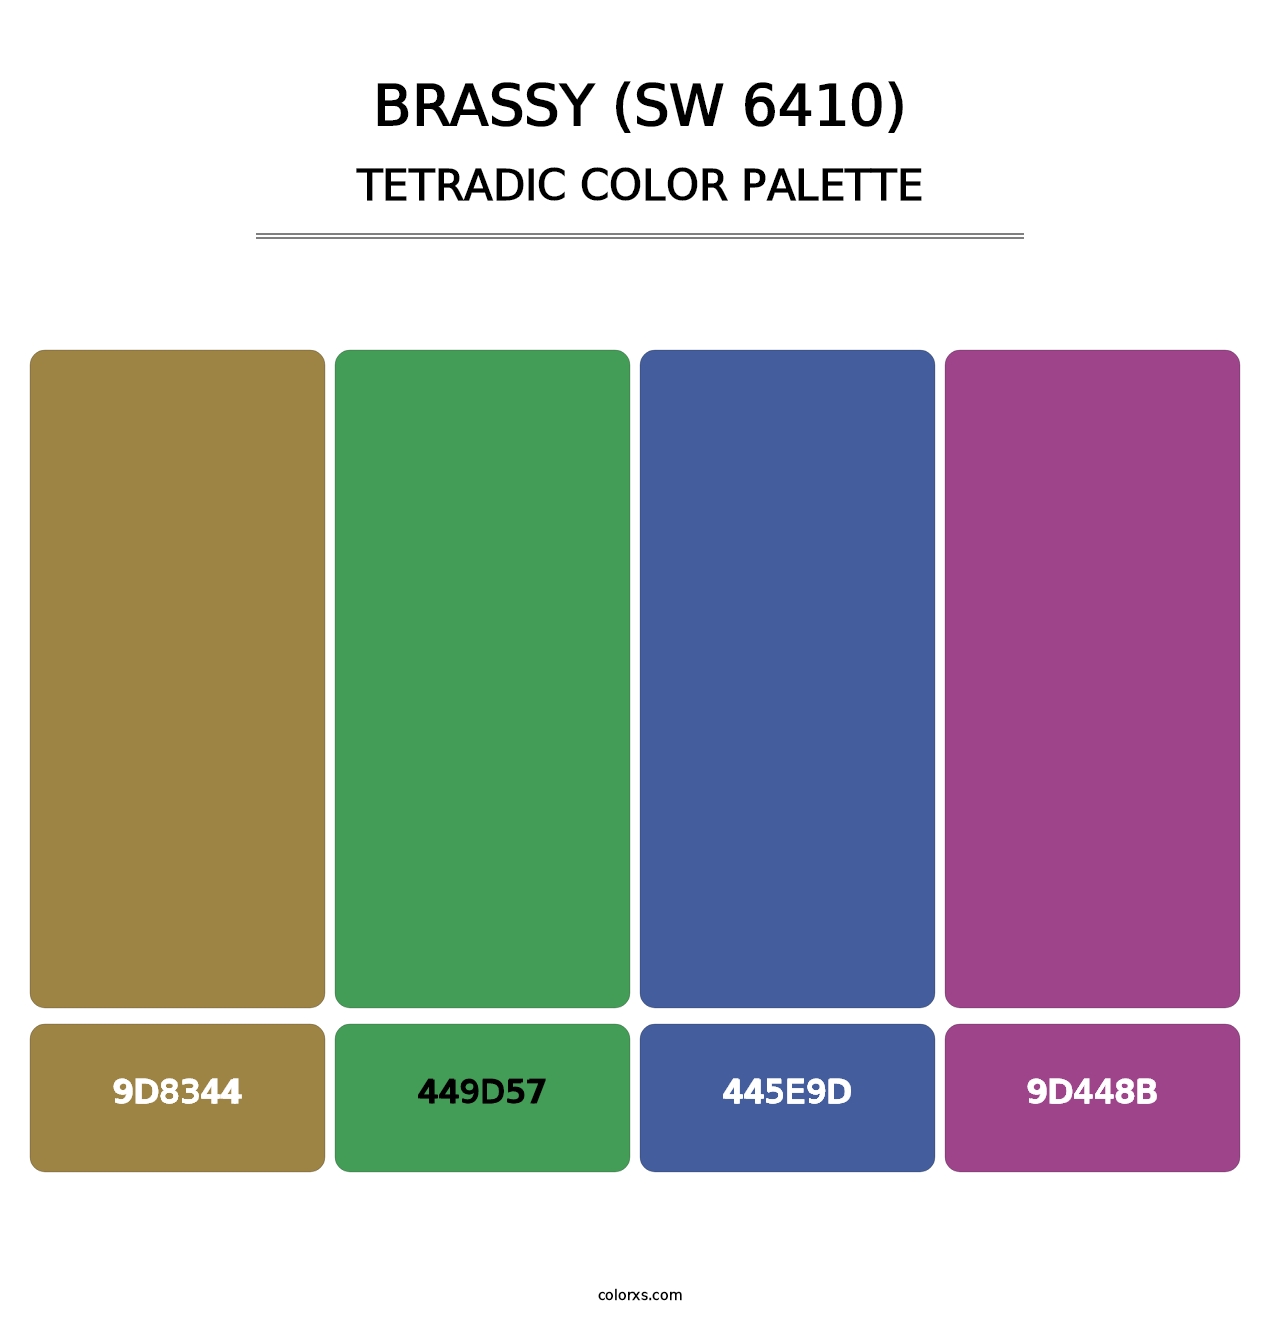 Brassy (SW 6410) - Tetradic Color Palette